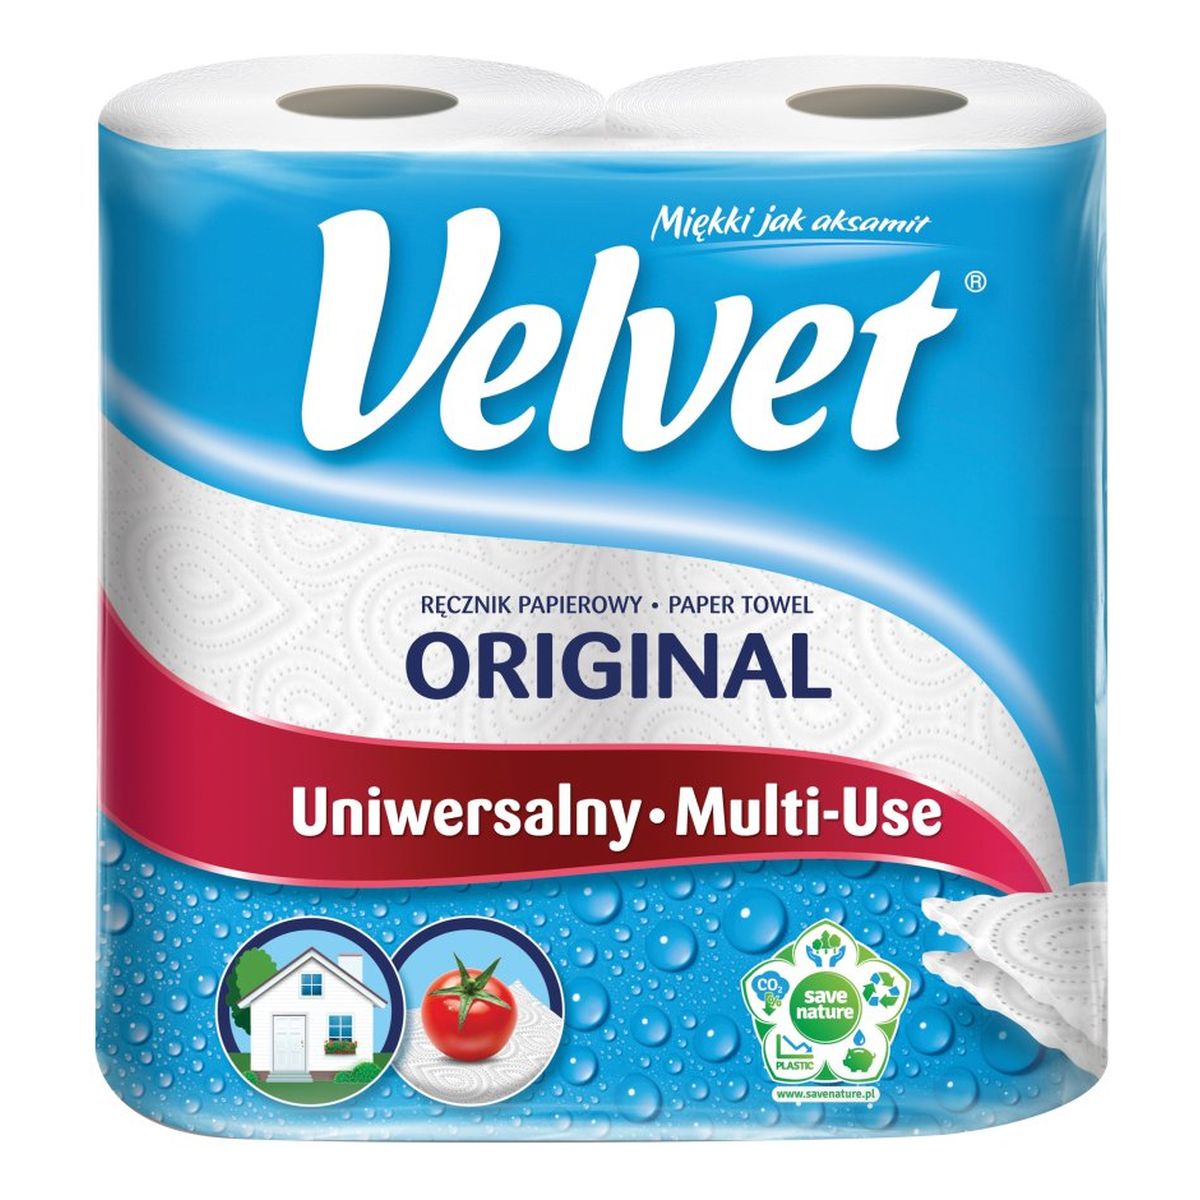 Velvet Original Ręcznik papierowy